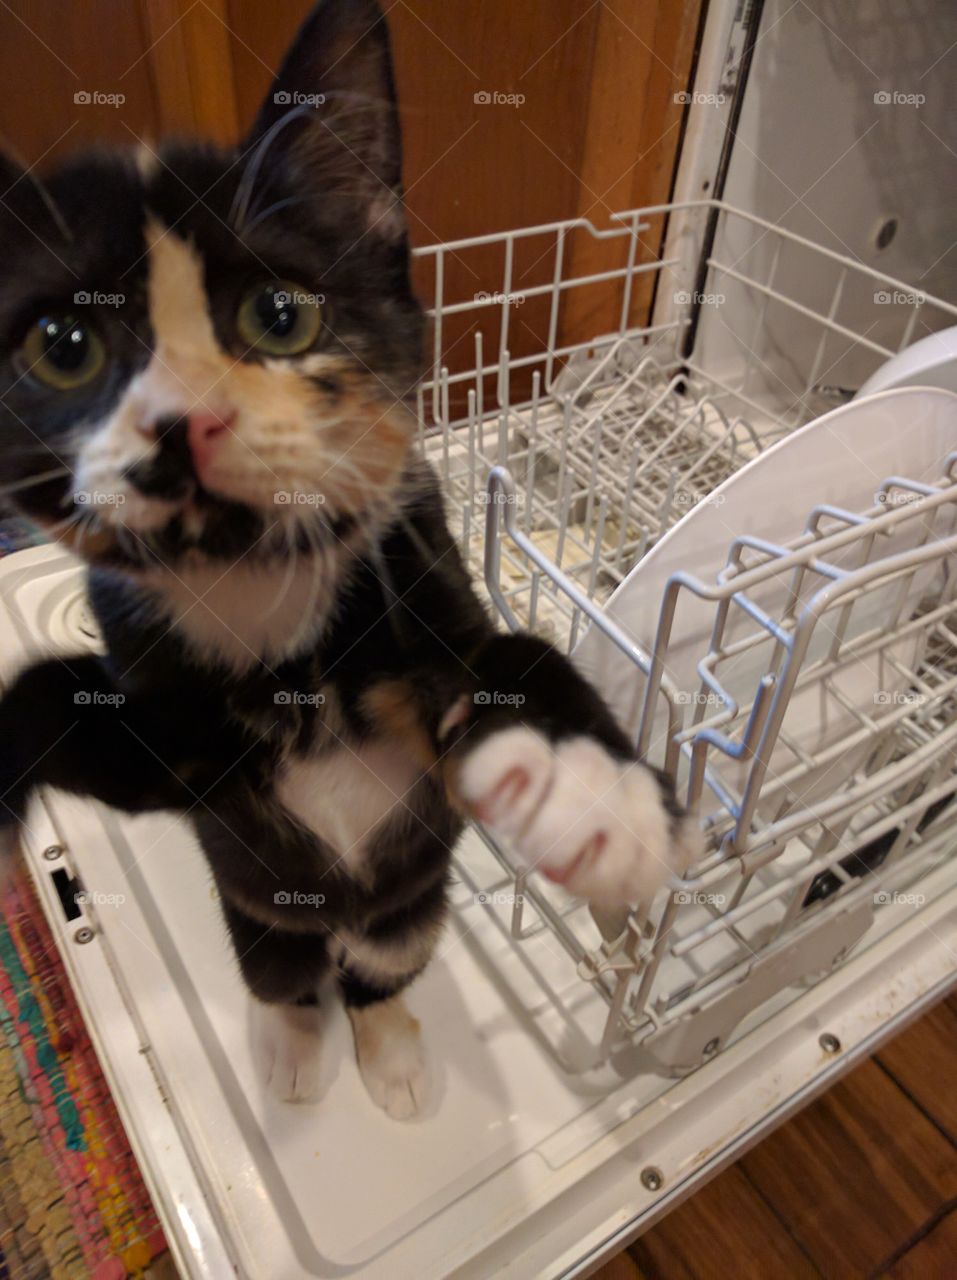 Cat in Dishwasher